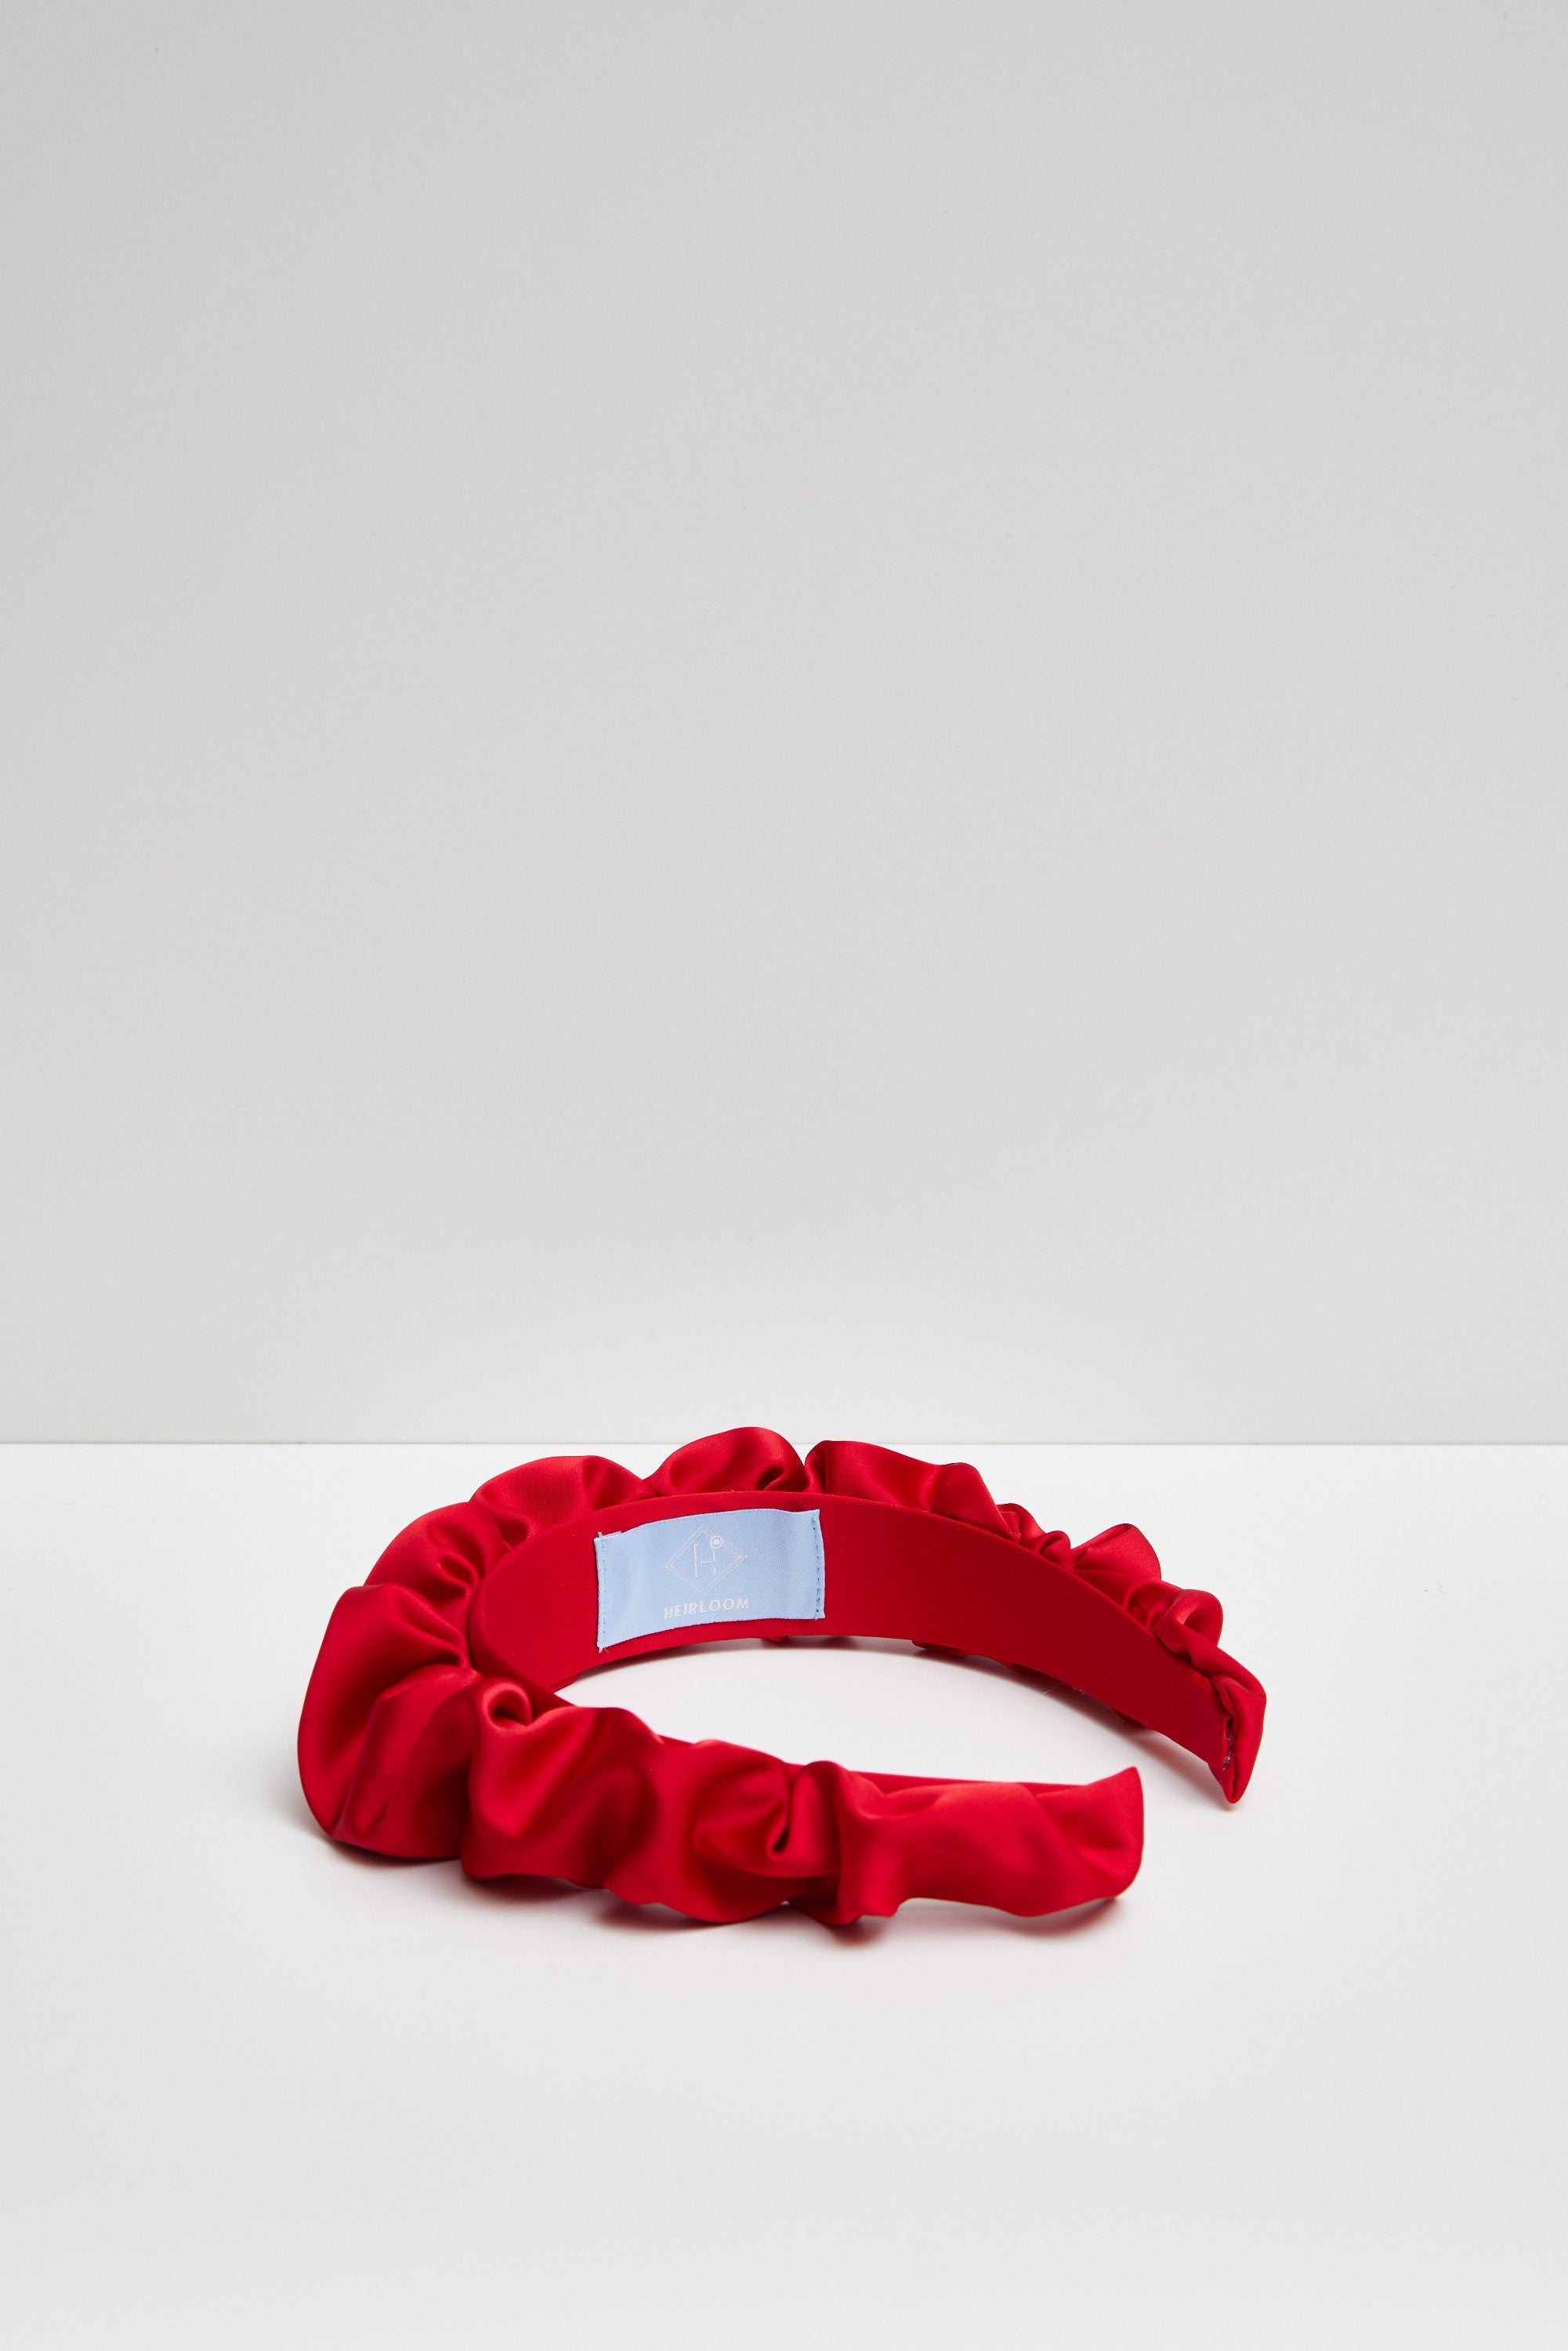 Clueless headband / Red satin